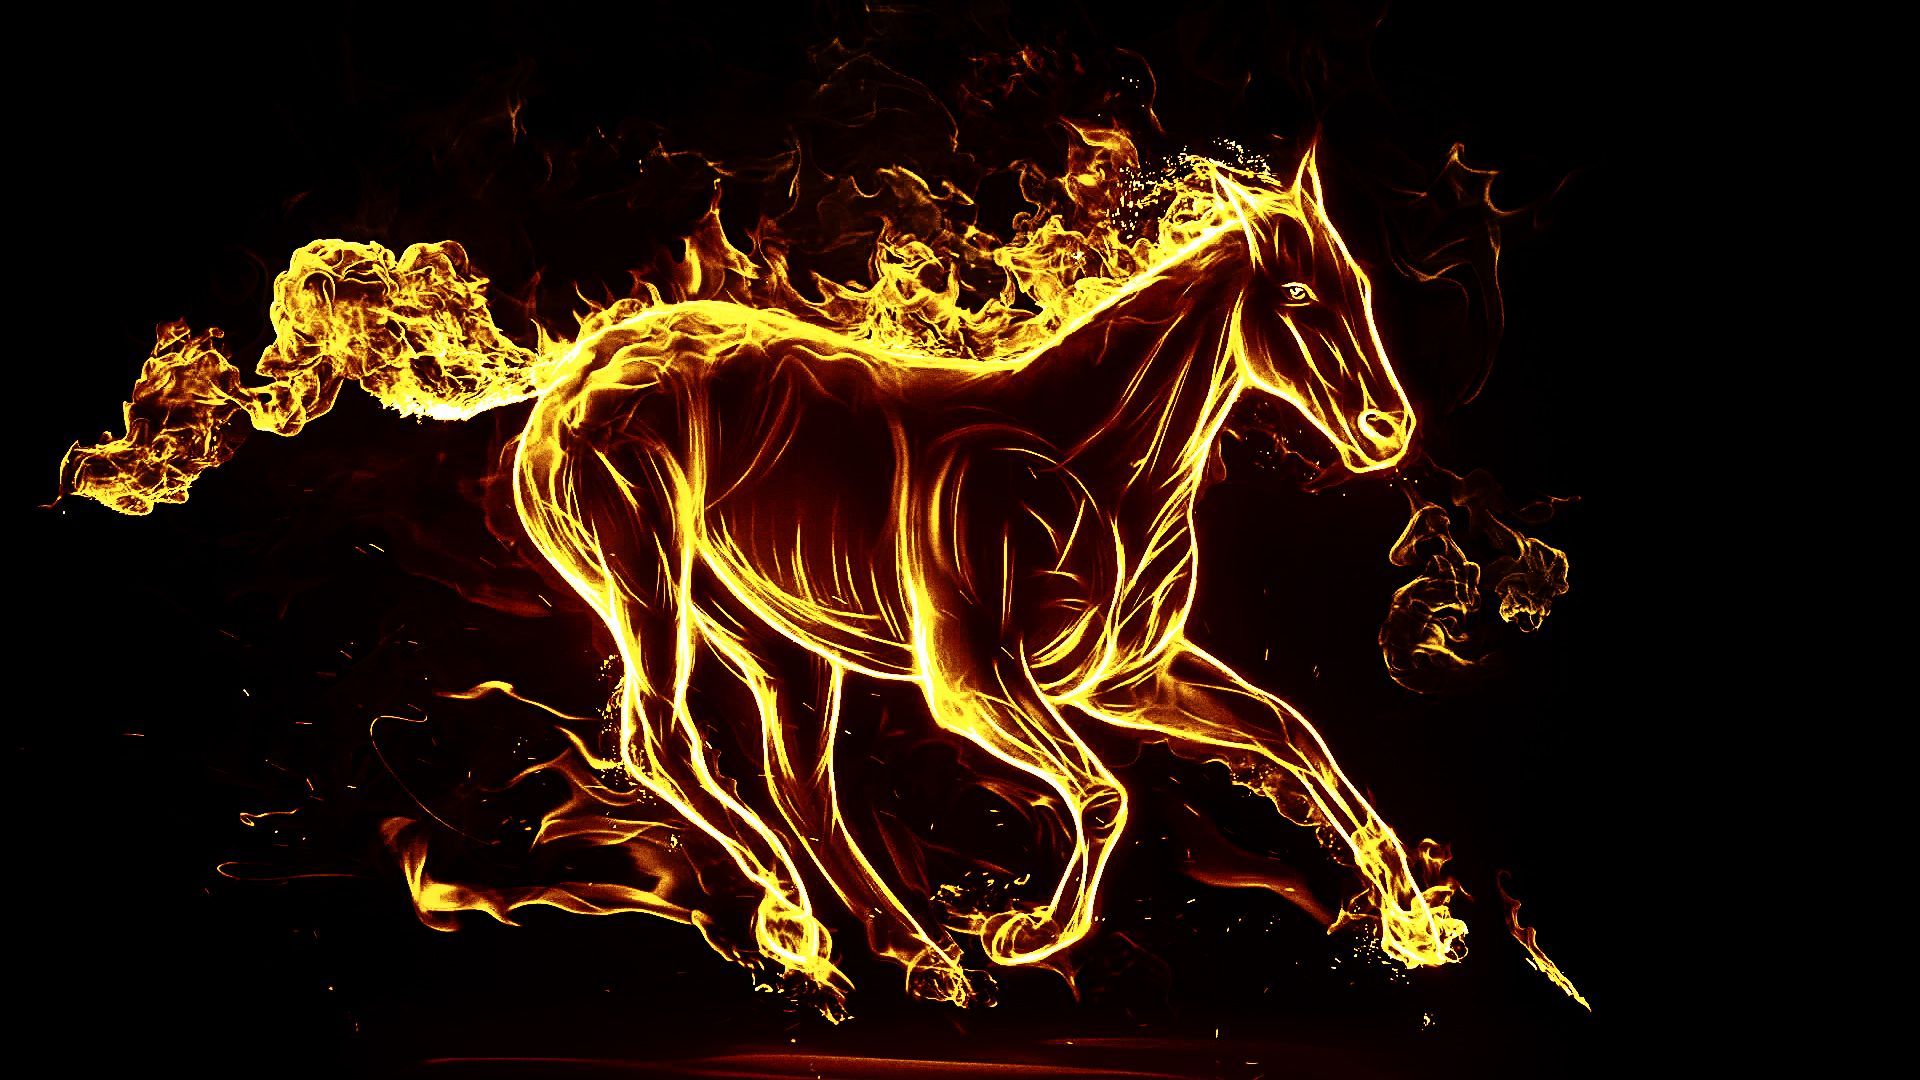 Horse on fire wallpaper 1920x1080 HD Fire horse wallpaper top free fire horse background